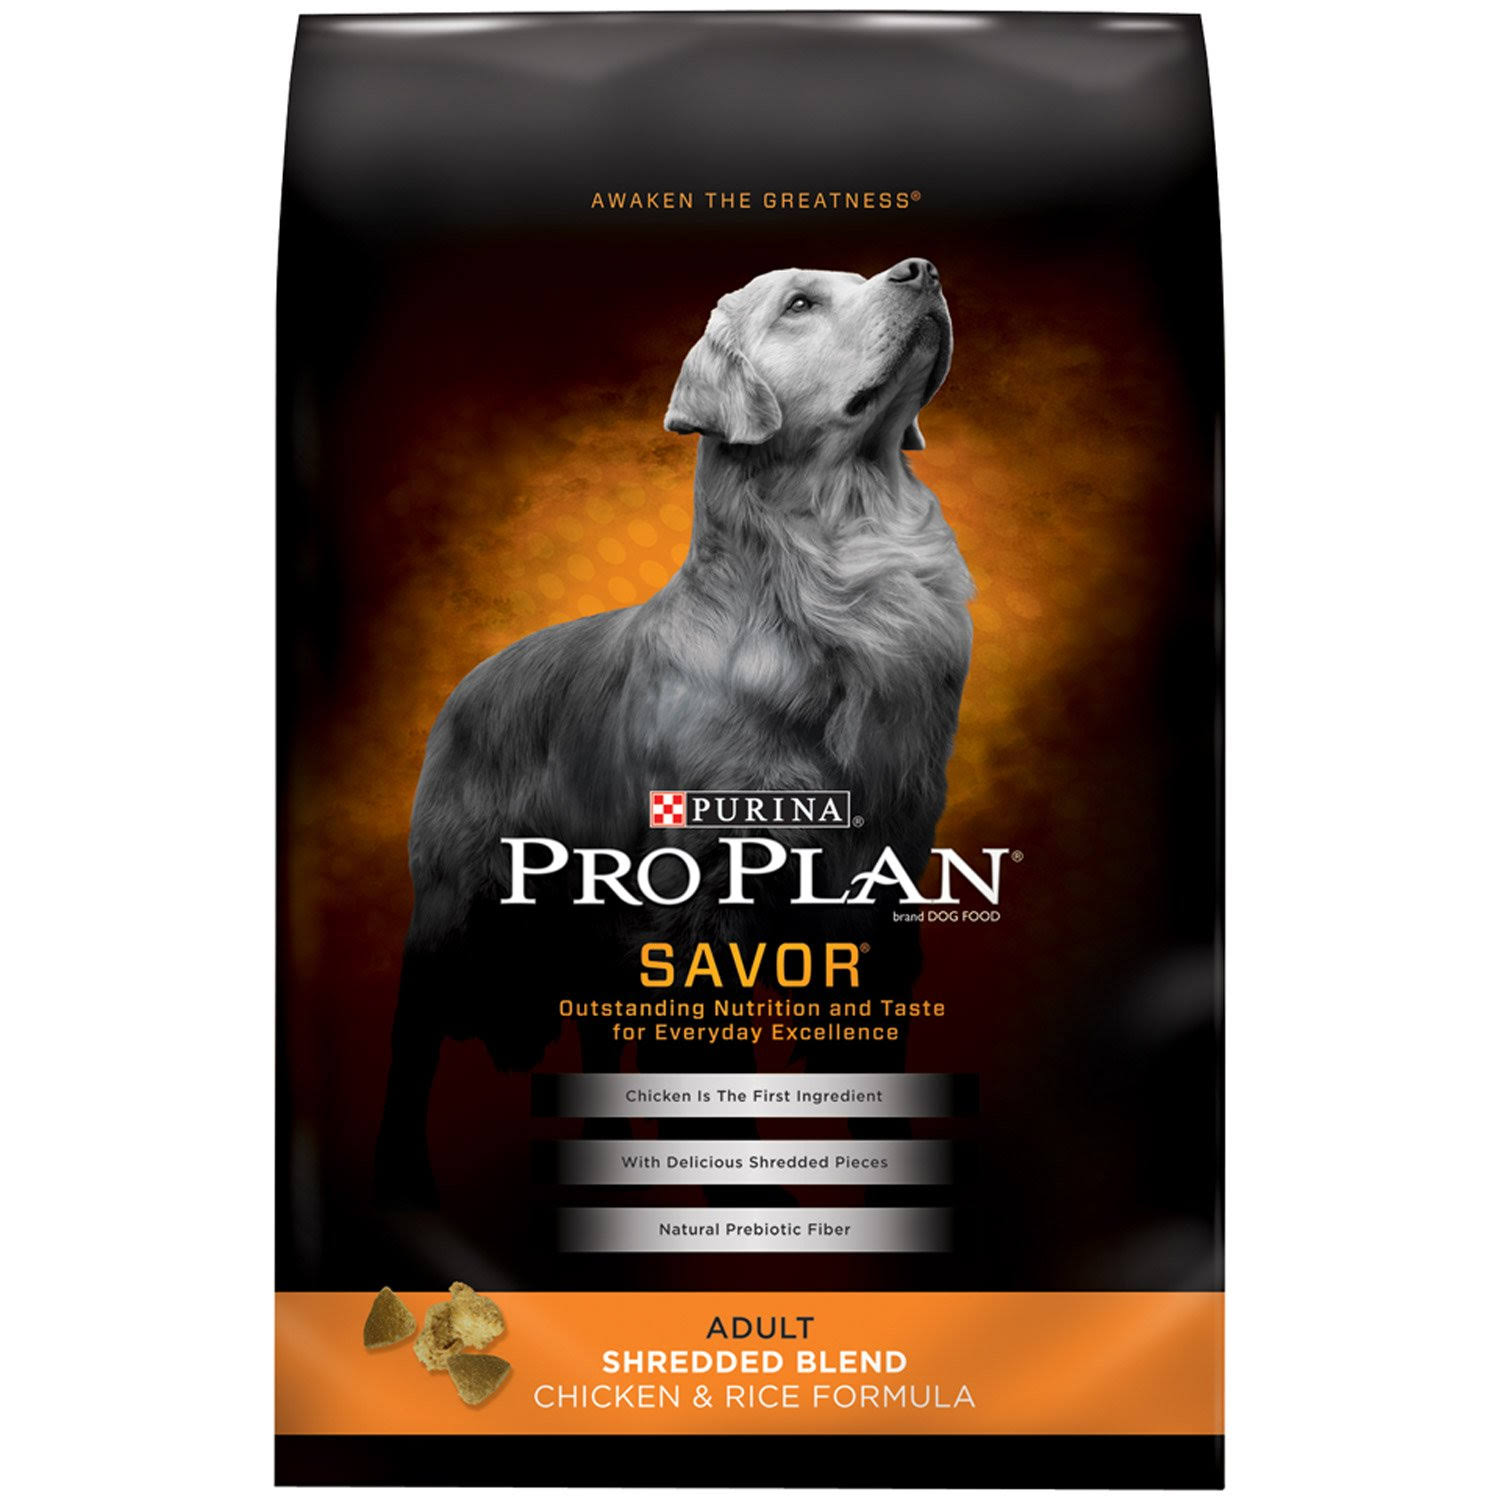 Purina Pro Plan Savor Dry Dog Food - Shredded Blend, Adult, Chicken and Rice Formula